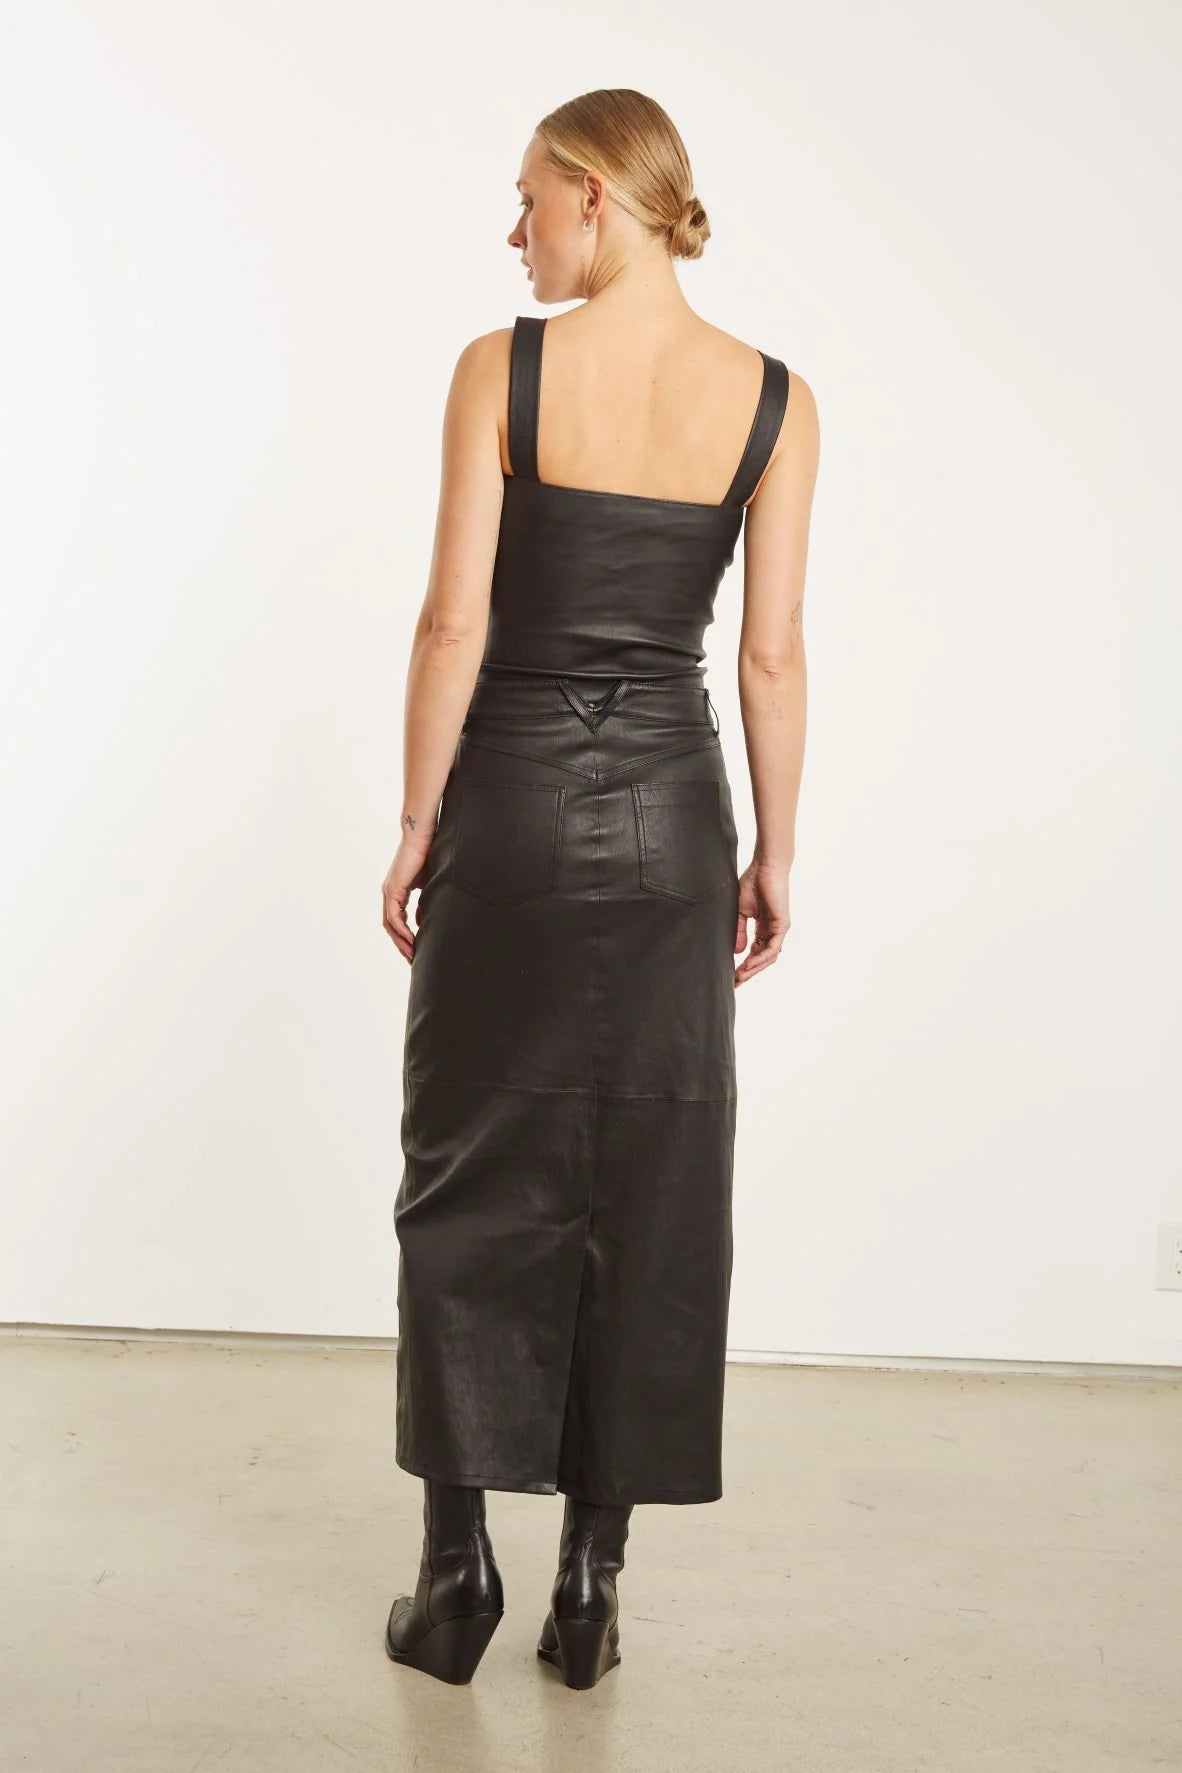 Black Leather 5 Pocket Long Skirt